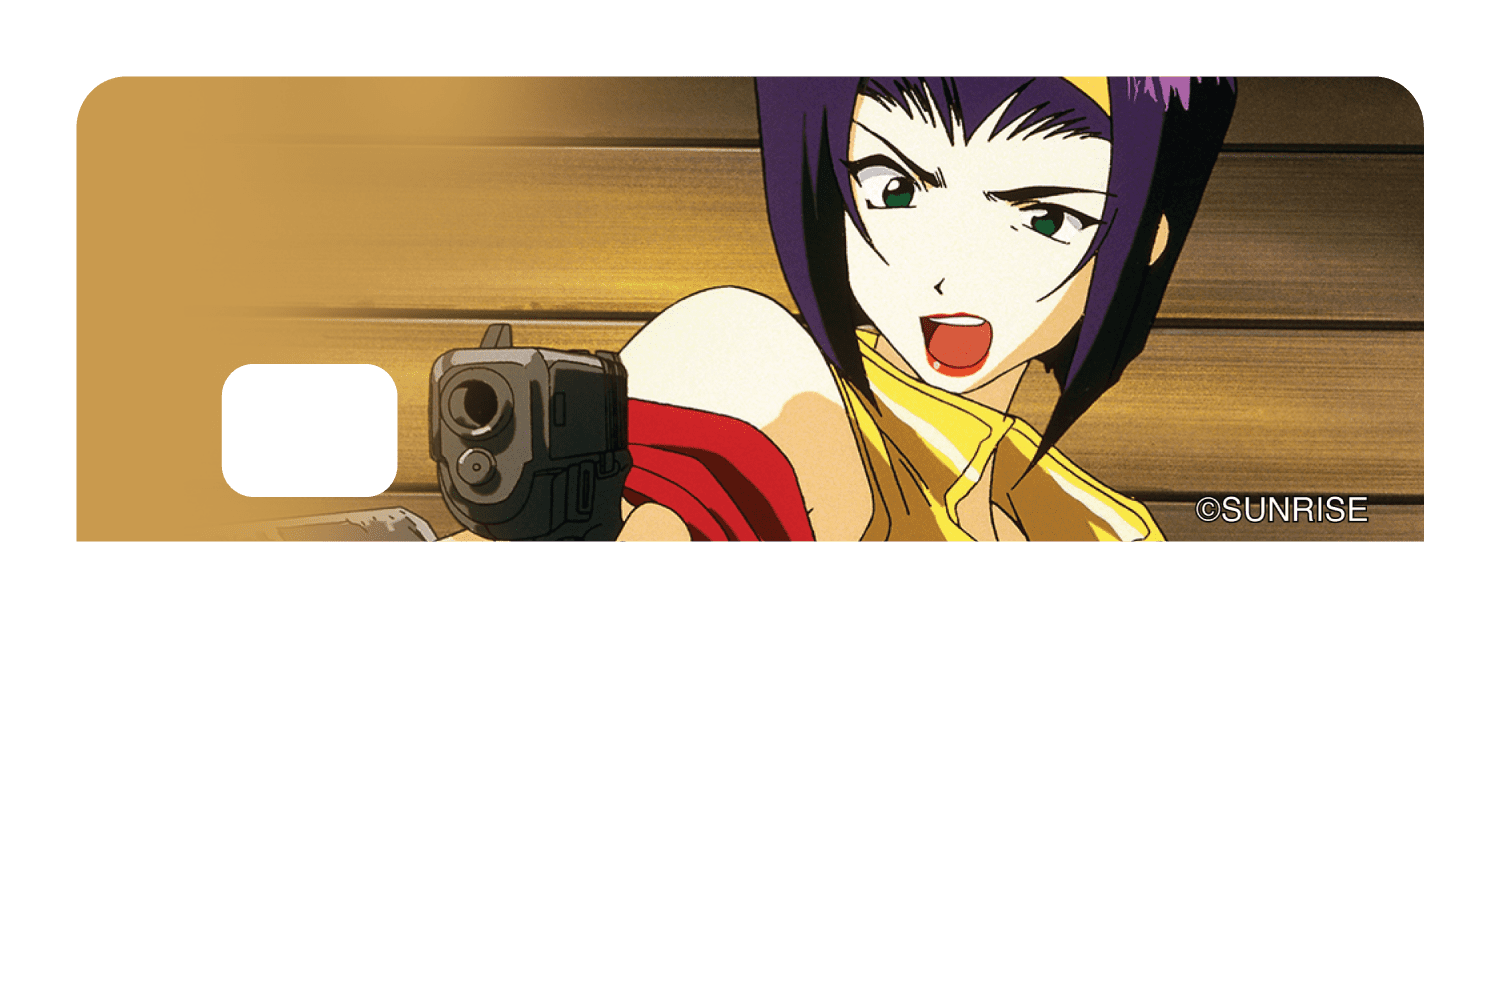 Faye with a gun